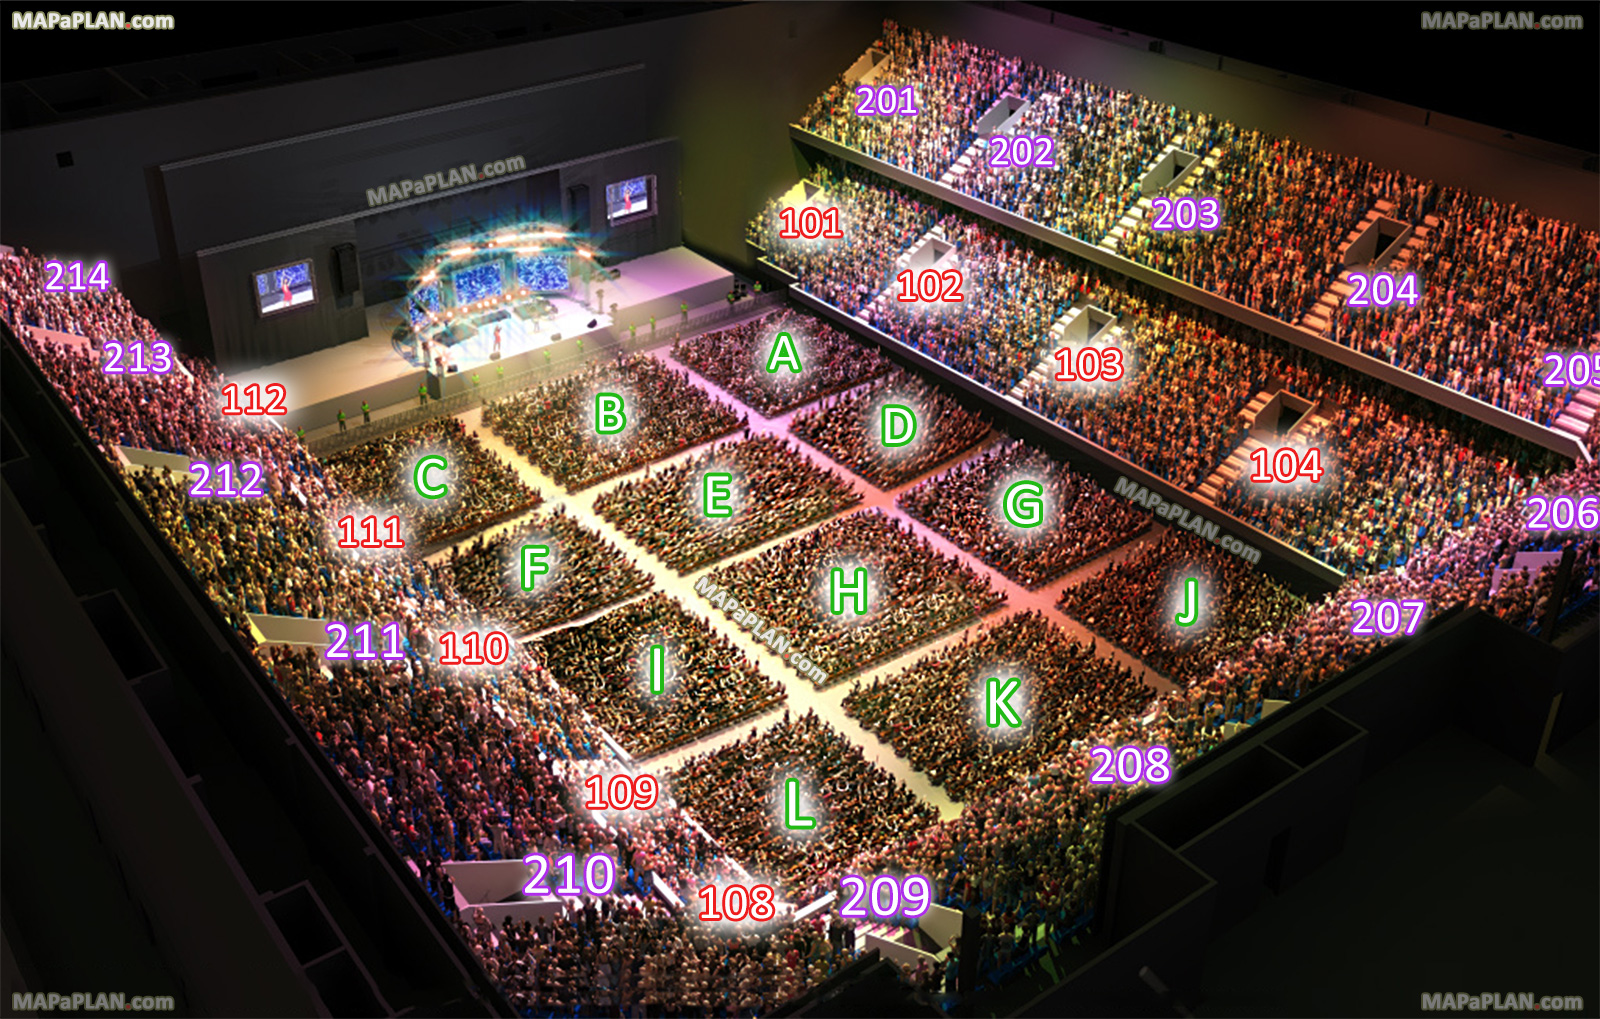 Amsterdam Ziggo Dome Arena - Concert chart with stage, floor, inner